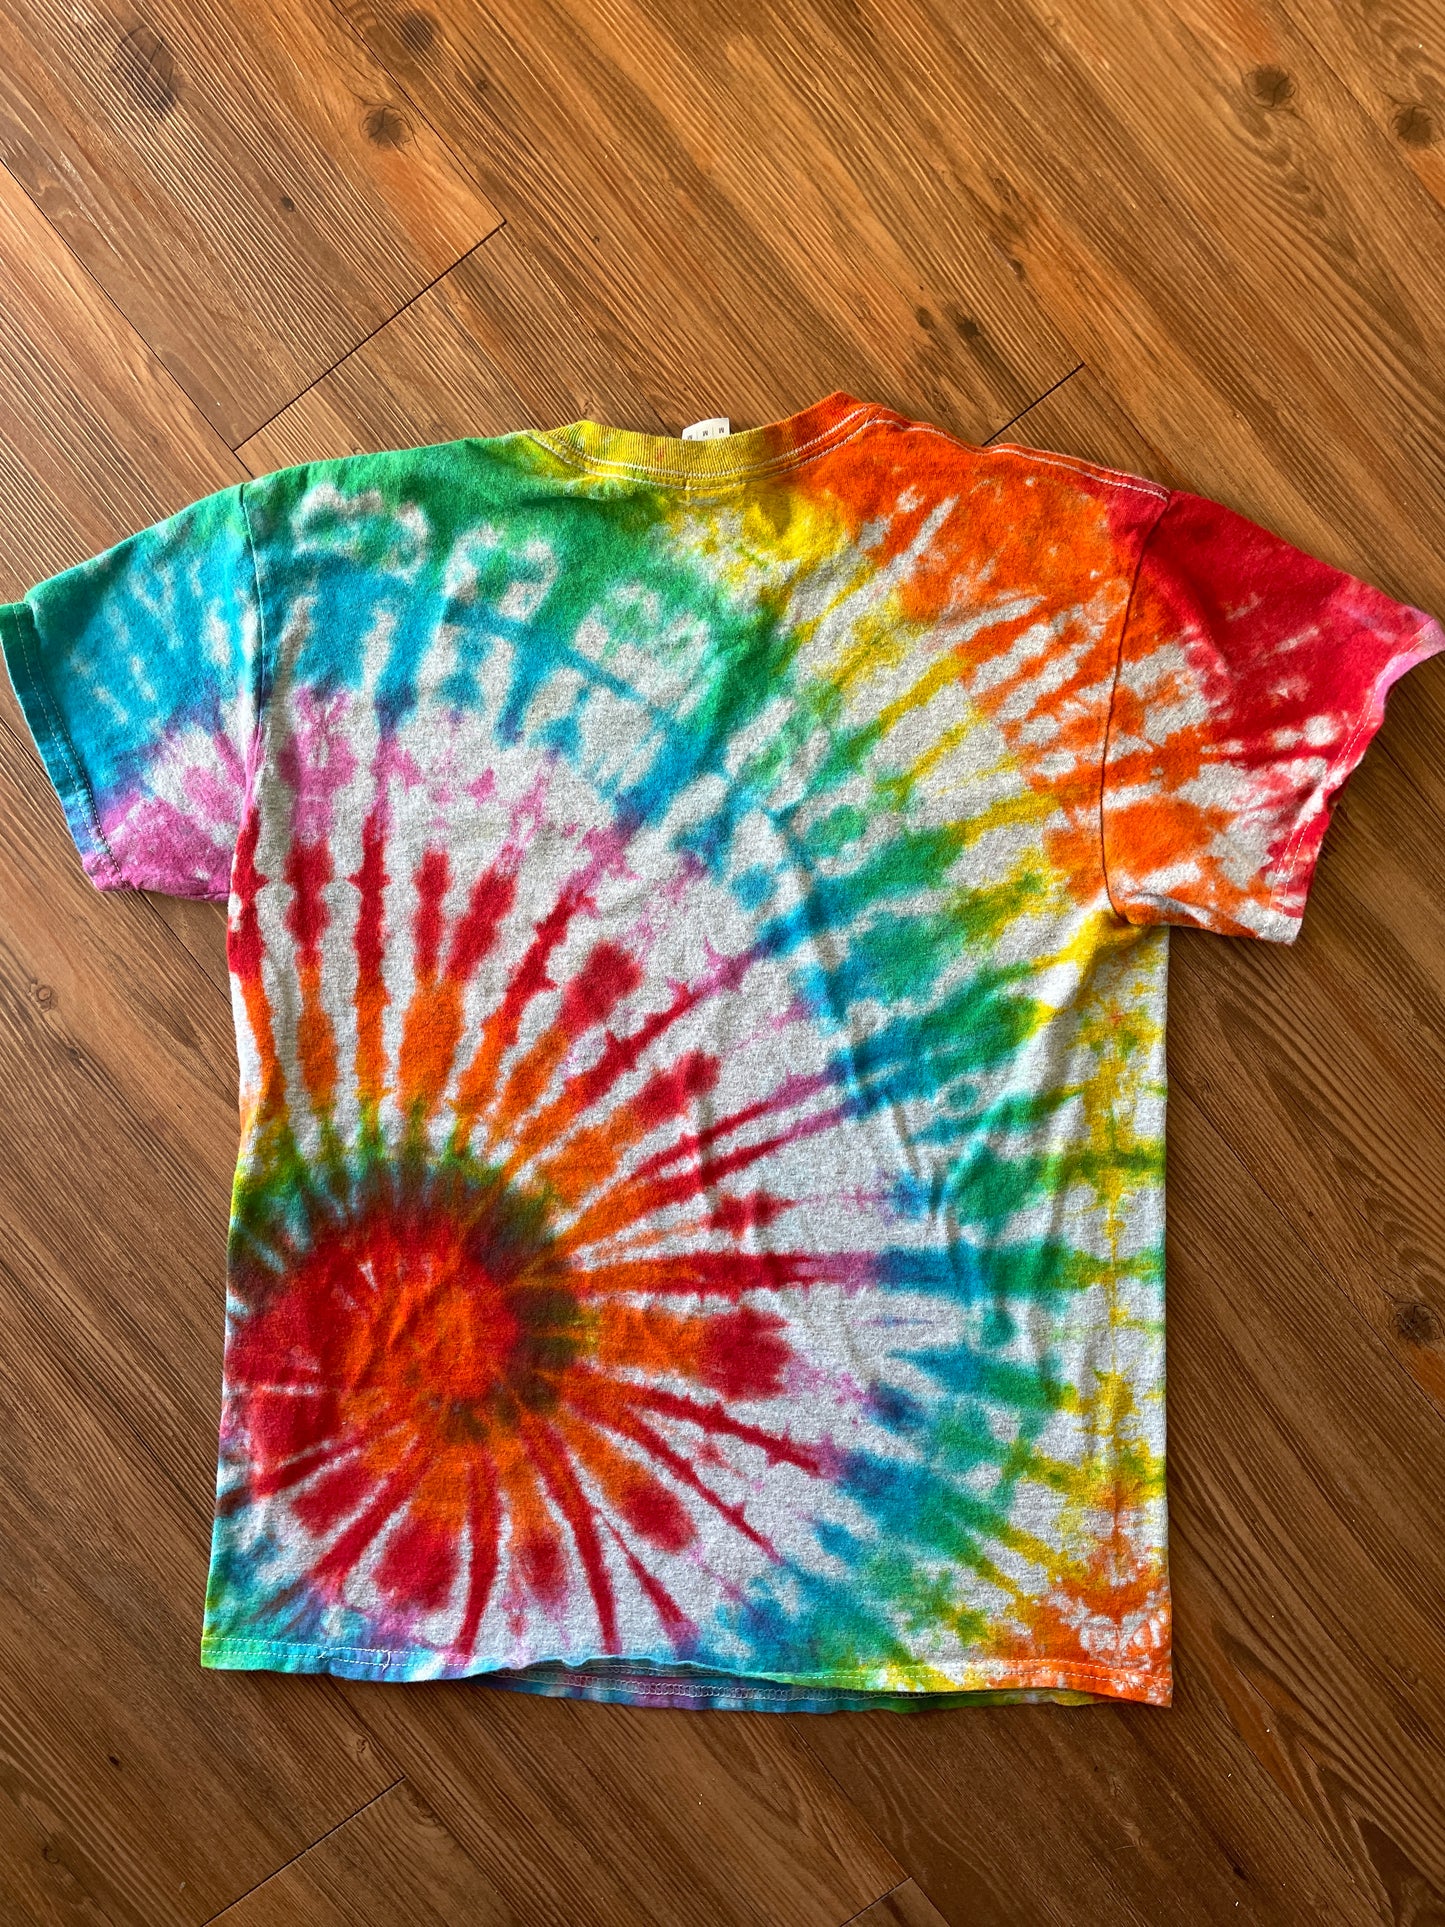 MEDIUM Men’s Be A Nice Human Handmade Tie Dye T-Shirt | One-Of-a-Kind Rainbow Spiral Short Sleeve